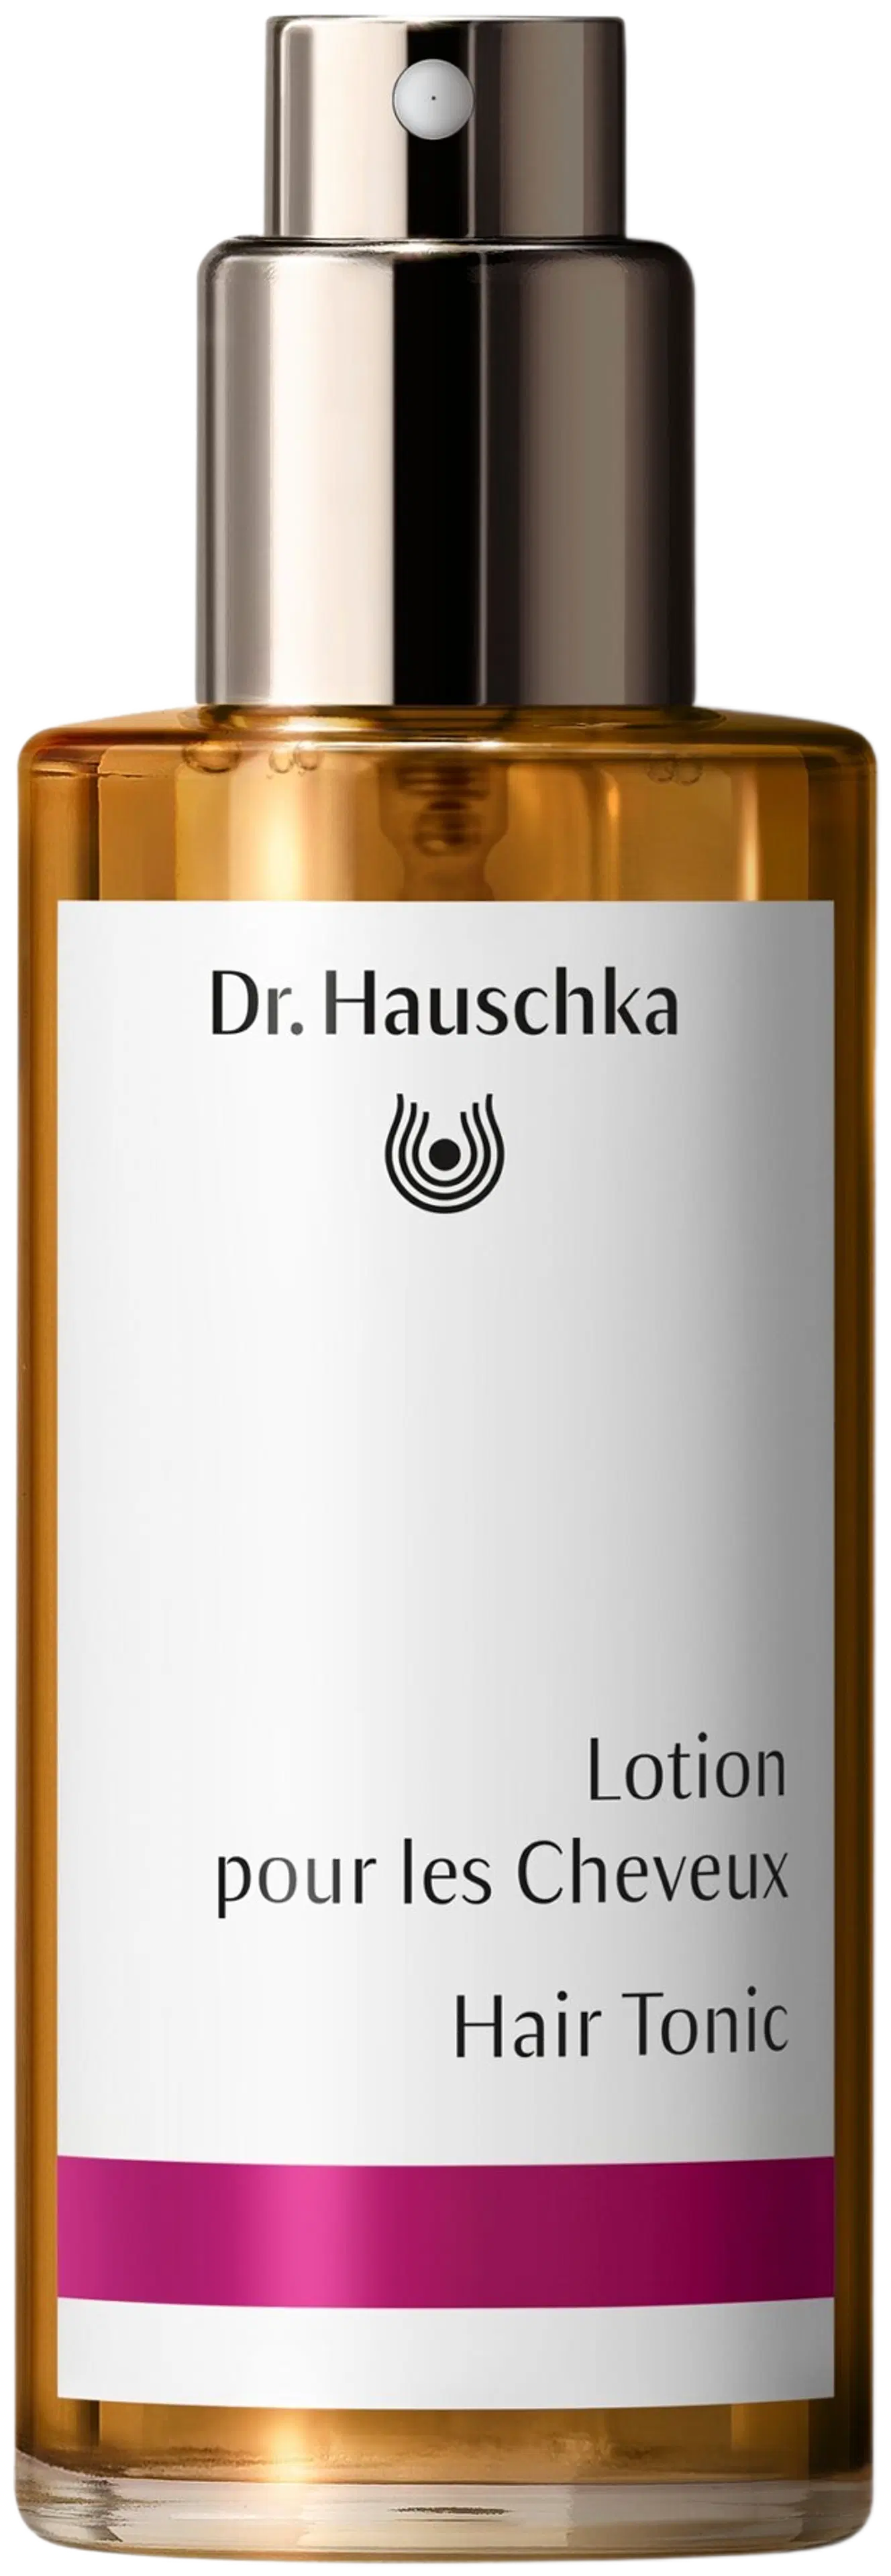 Dr. Hauschka Hair Tonic hiusvesi 100 ml